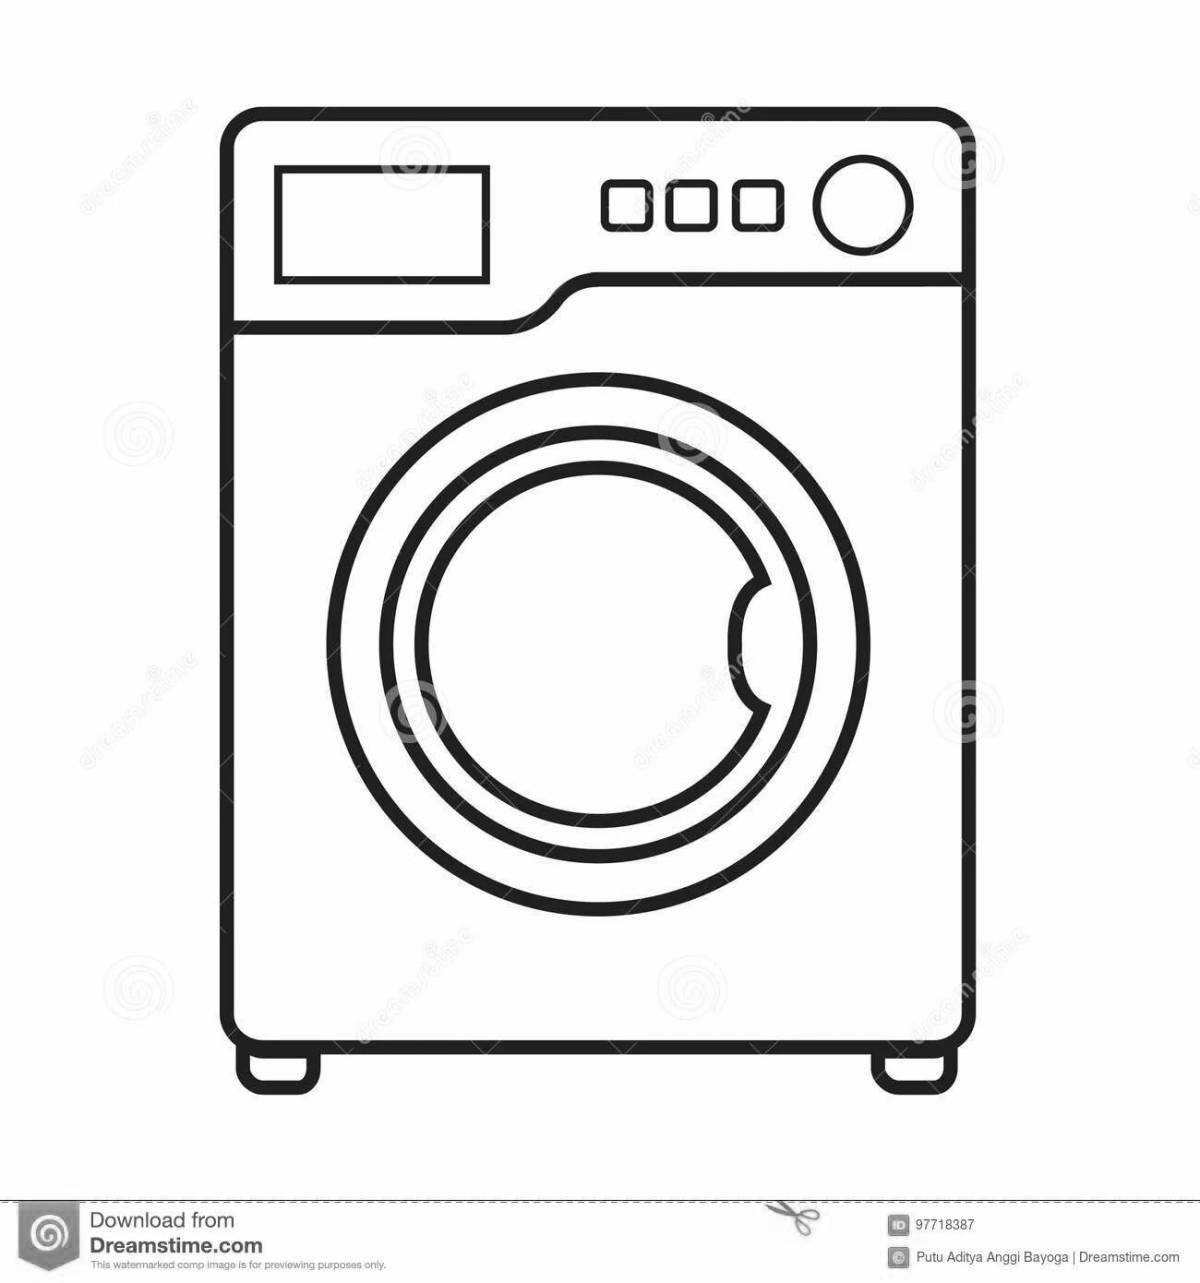 Bright washing machine coloring page